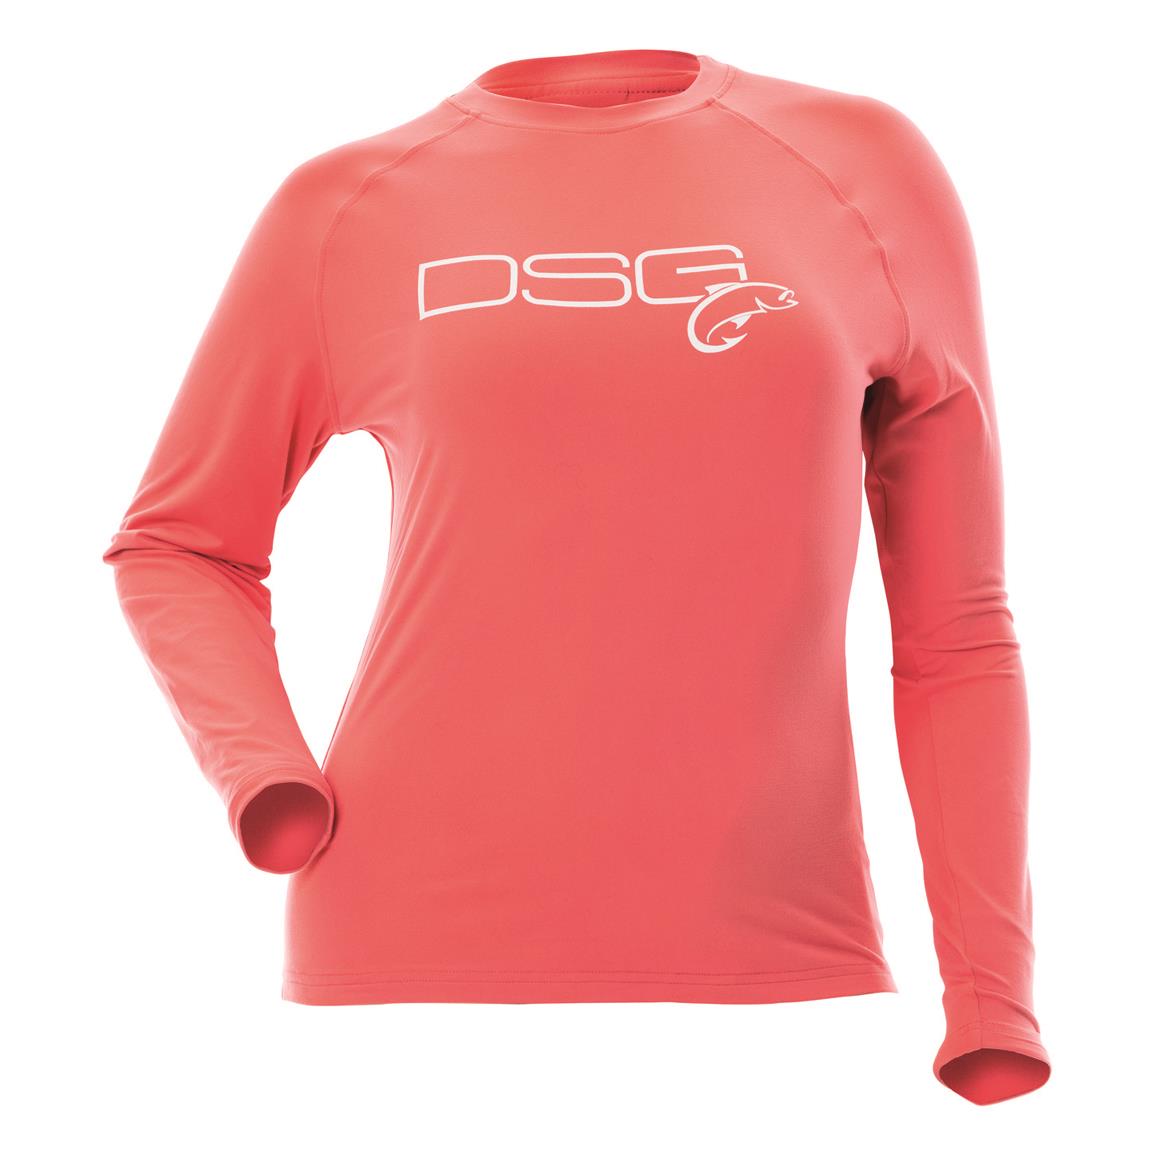 DSG Fishing Women's Solid Shirt, Rose